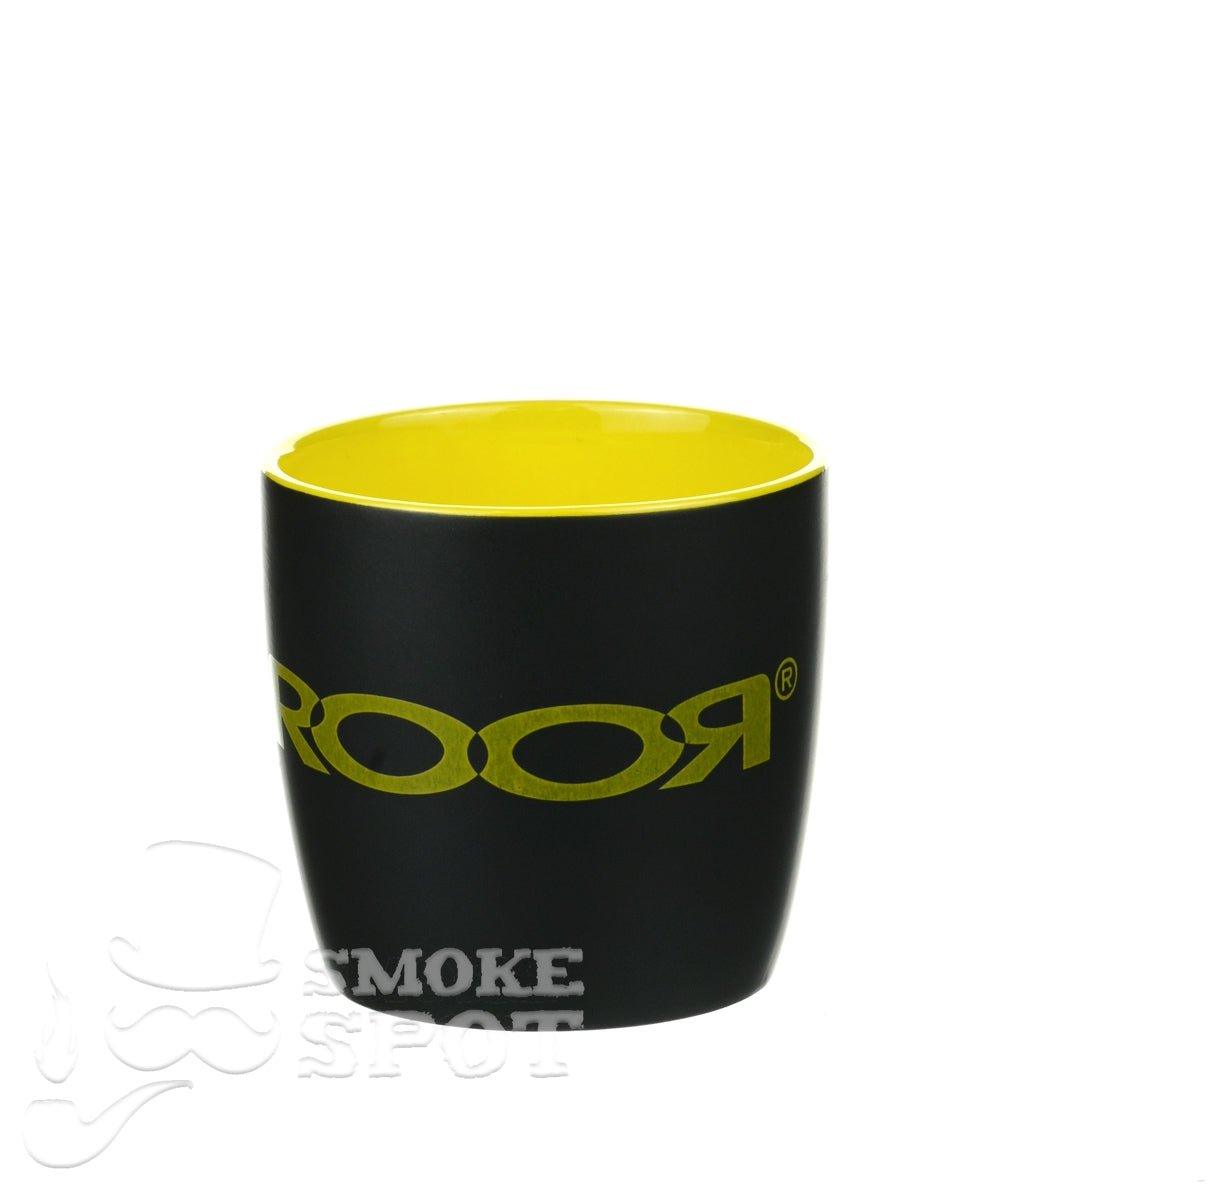 ROOR mug yellow yellow inside - Smoke Spot Smoke Shop